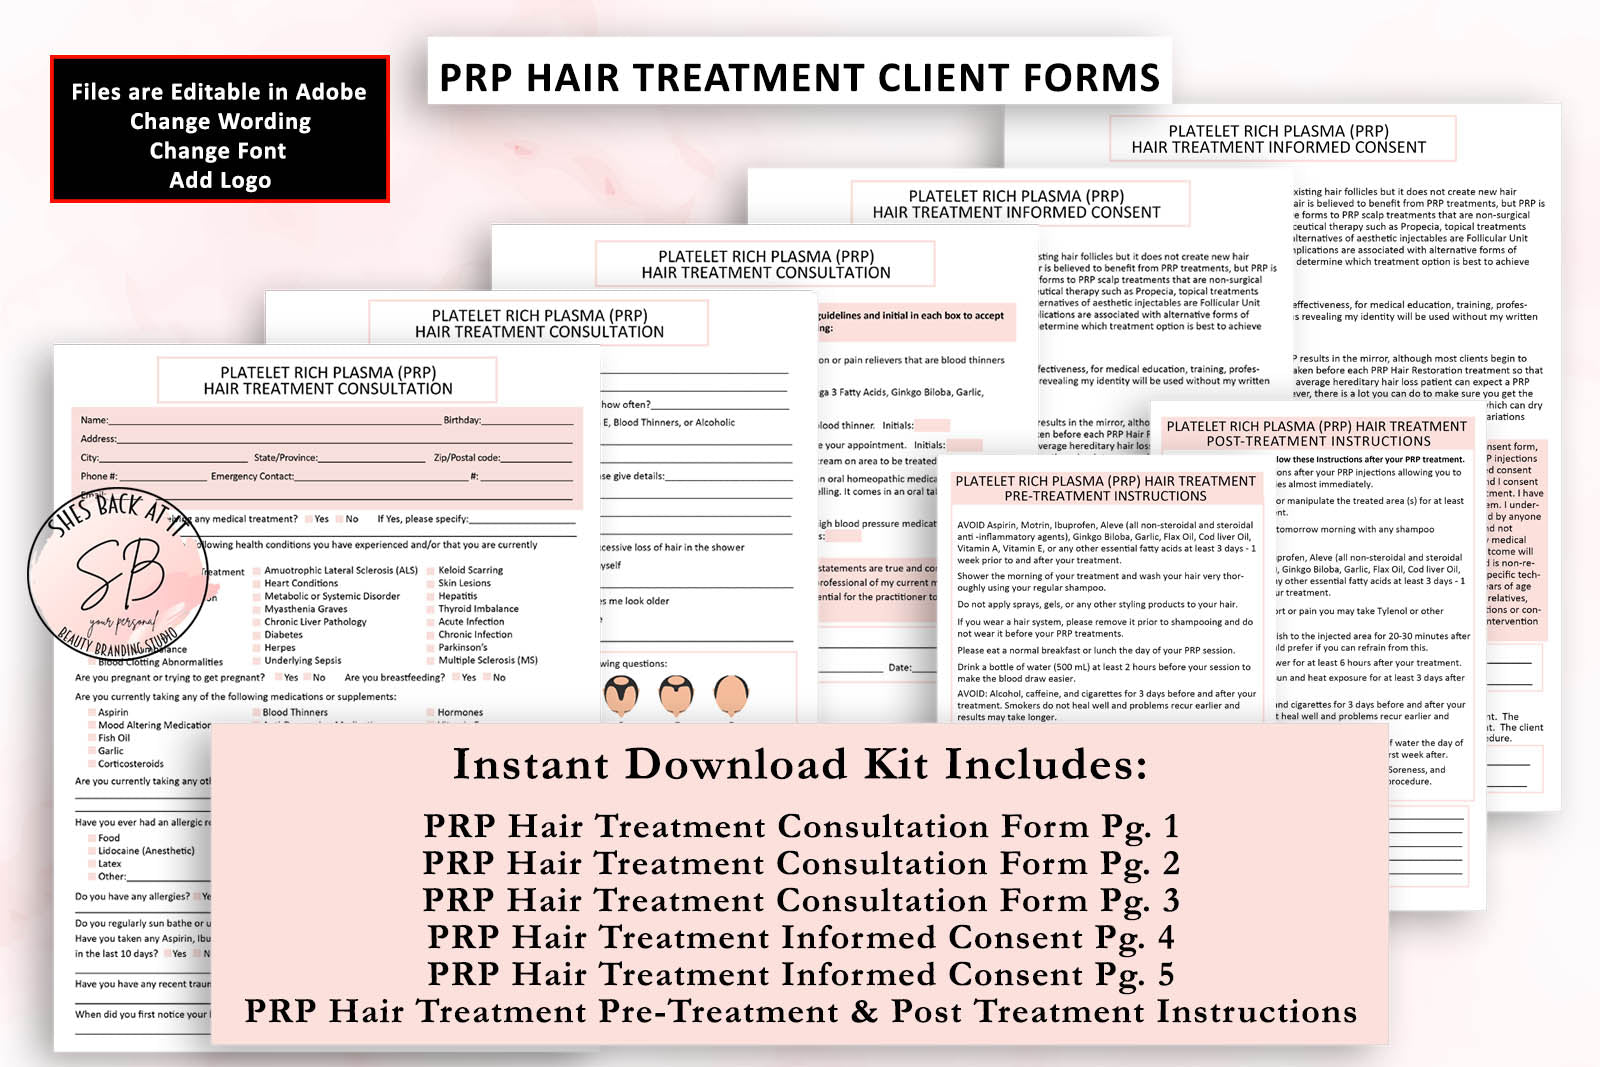 Platelet Rich Plasma Hair Treatment